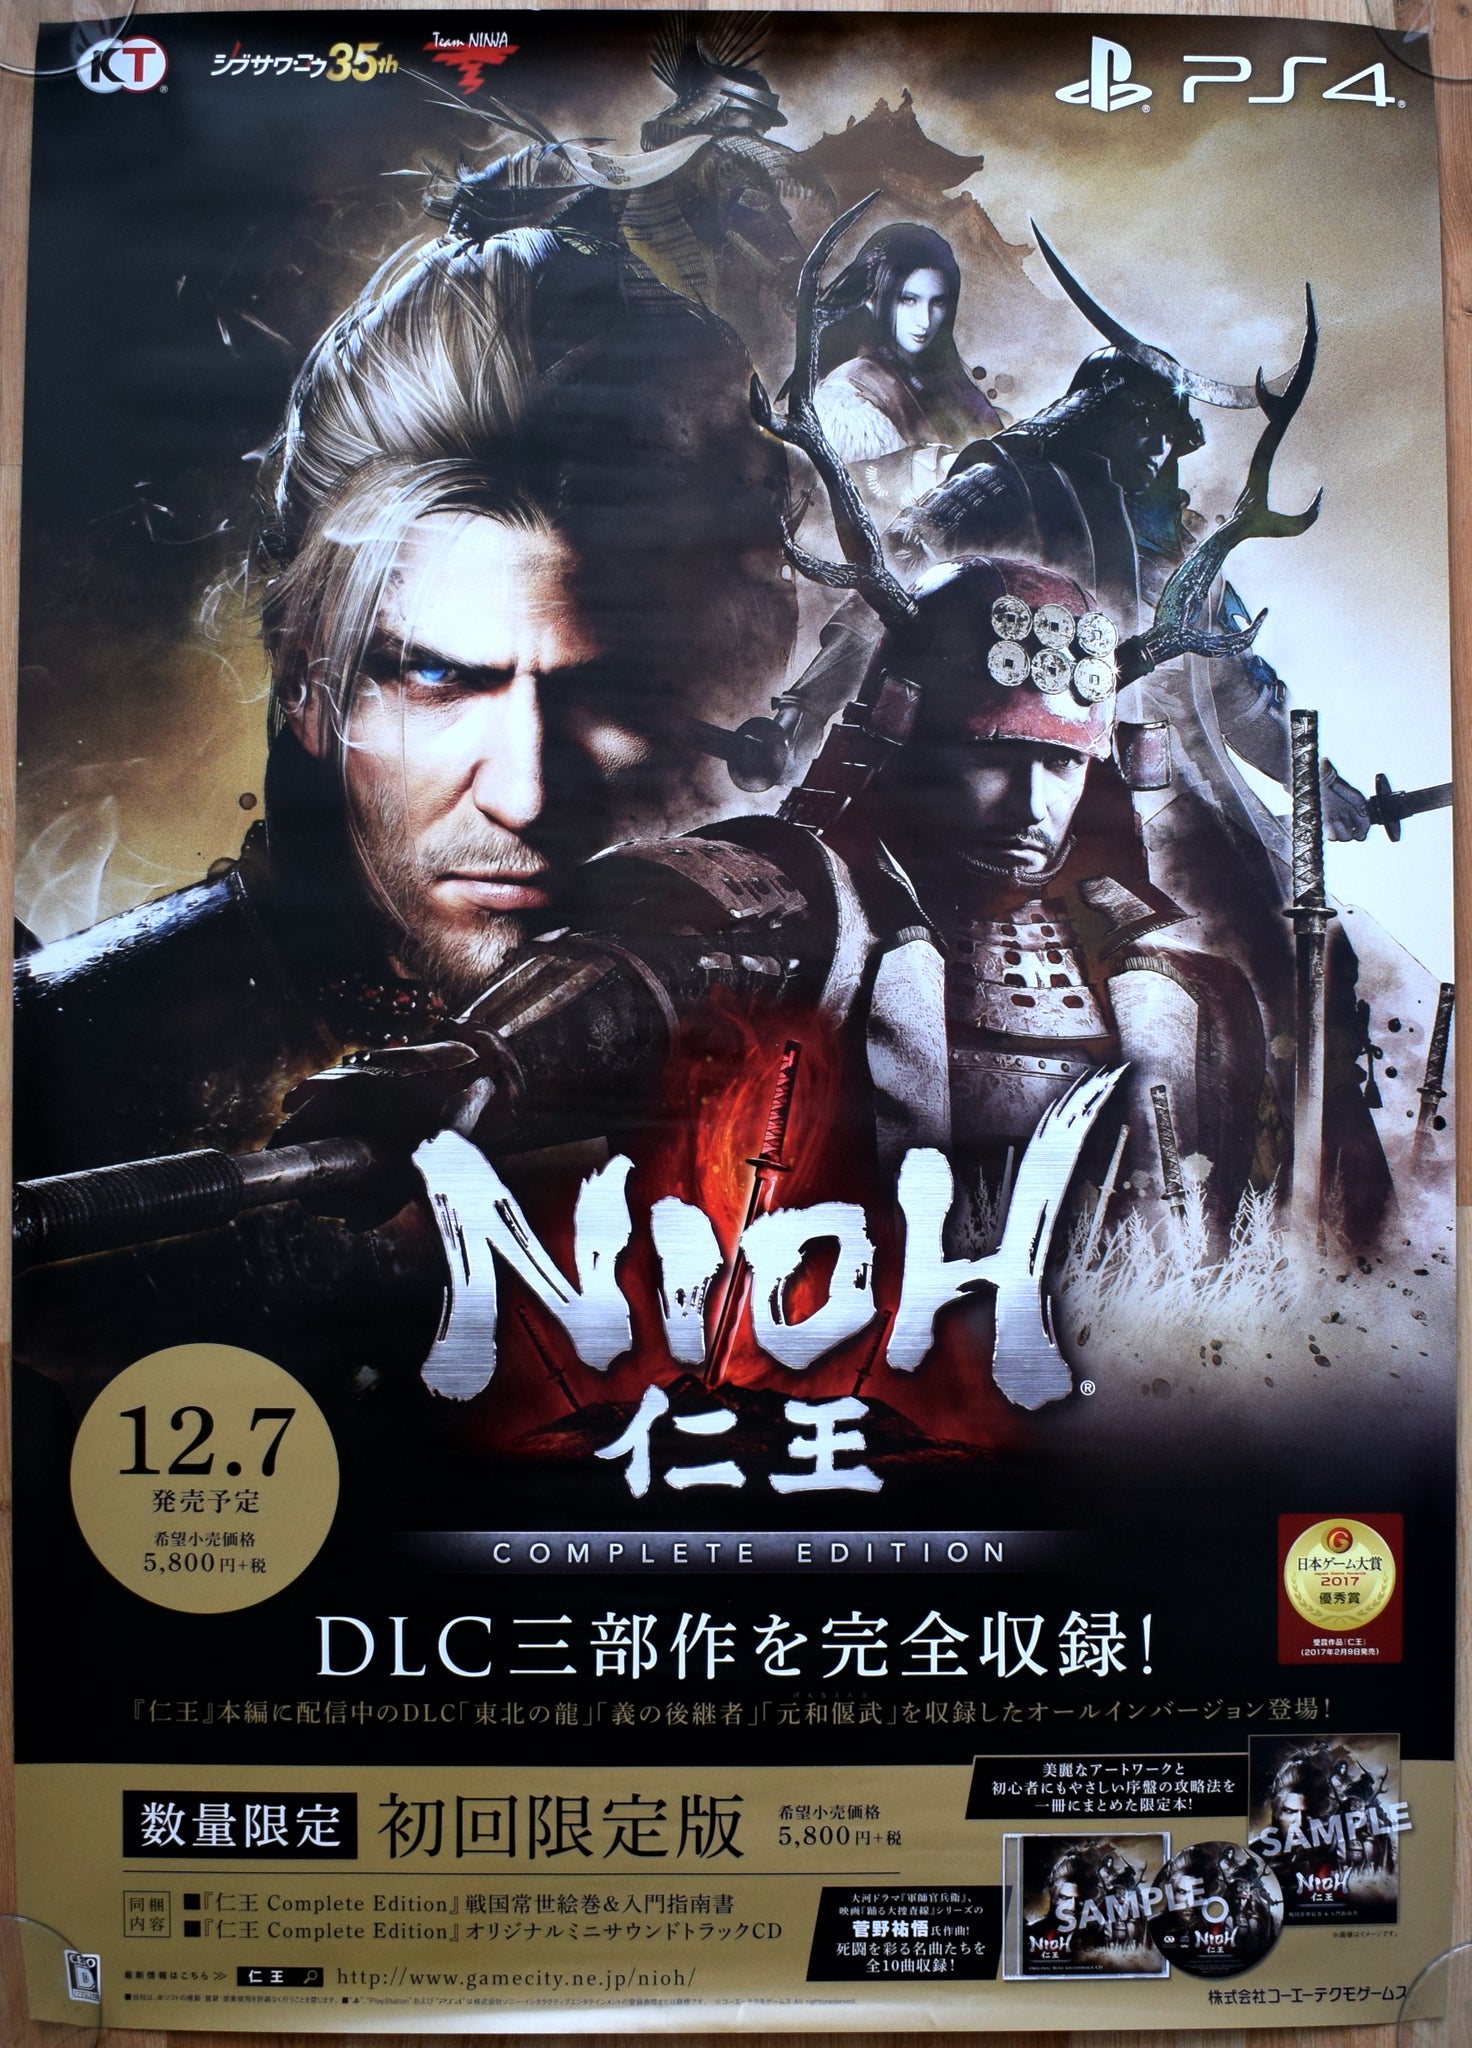 Nioh (B2) Japanese Promotional Poster